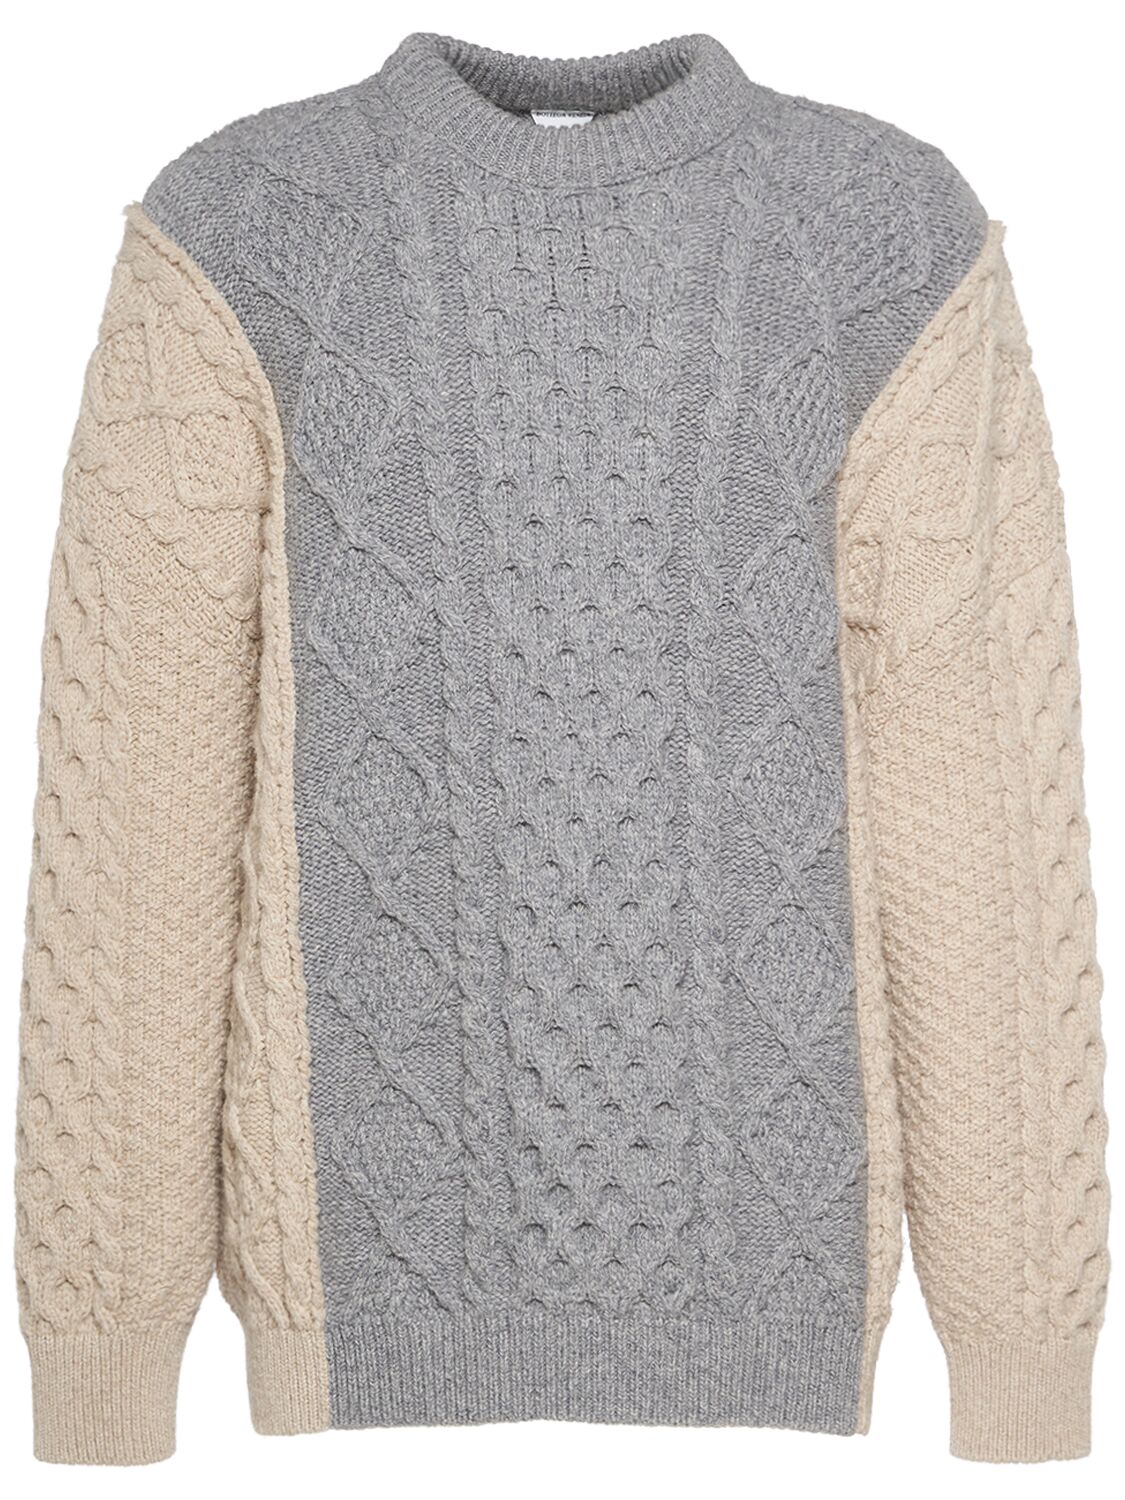 Image of Aran Knit Wool Blend Oversize Sweater